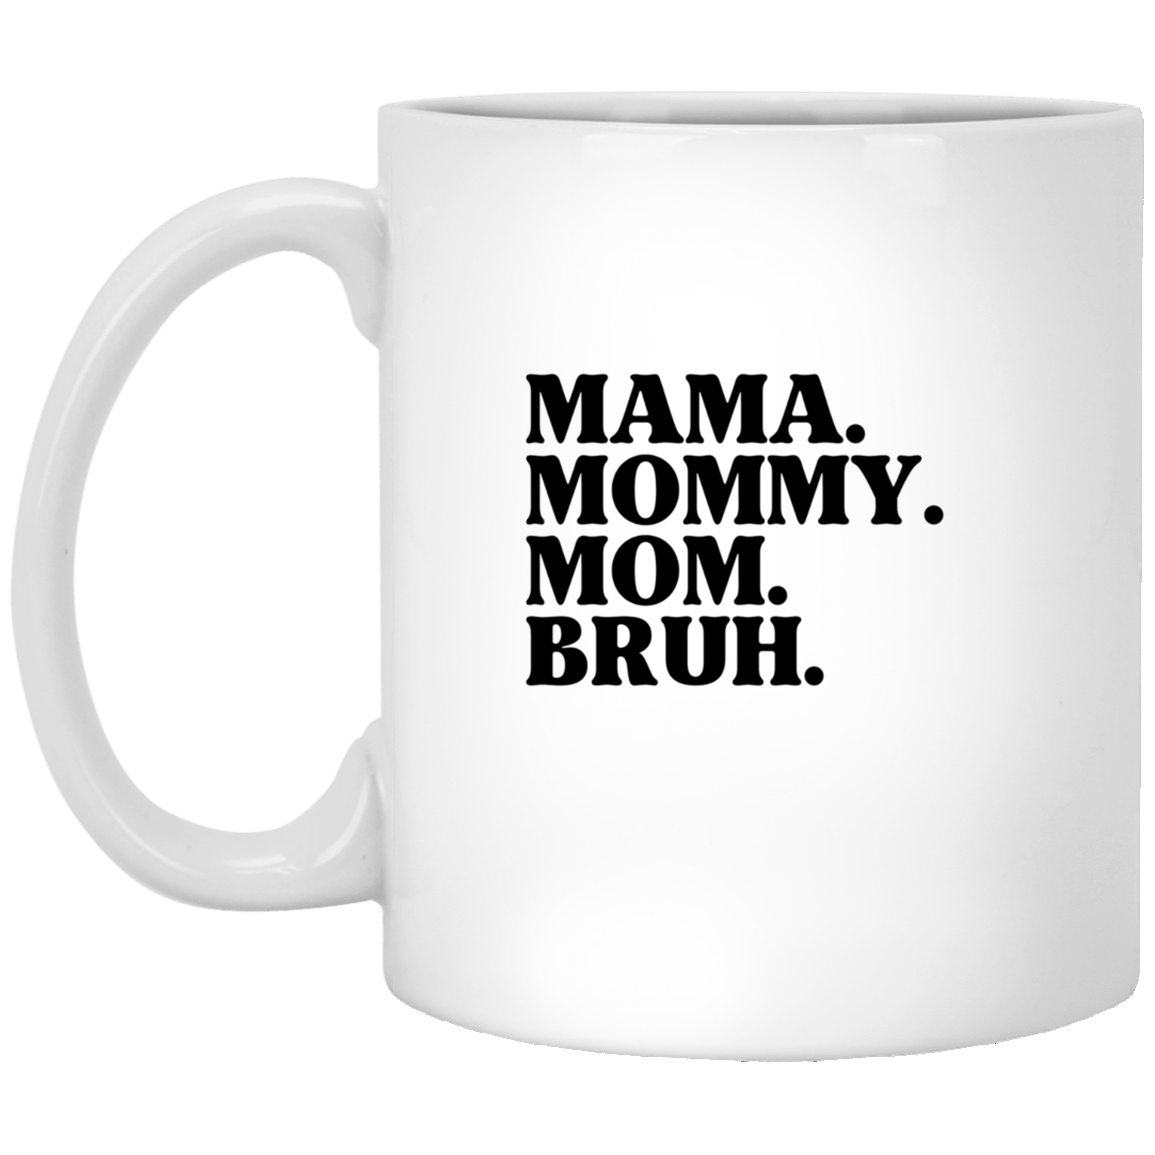 MAMMA, MOMMY, MOM, BRUH